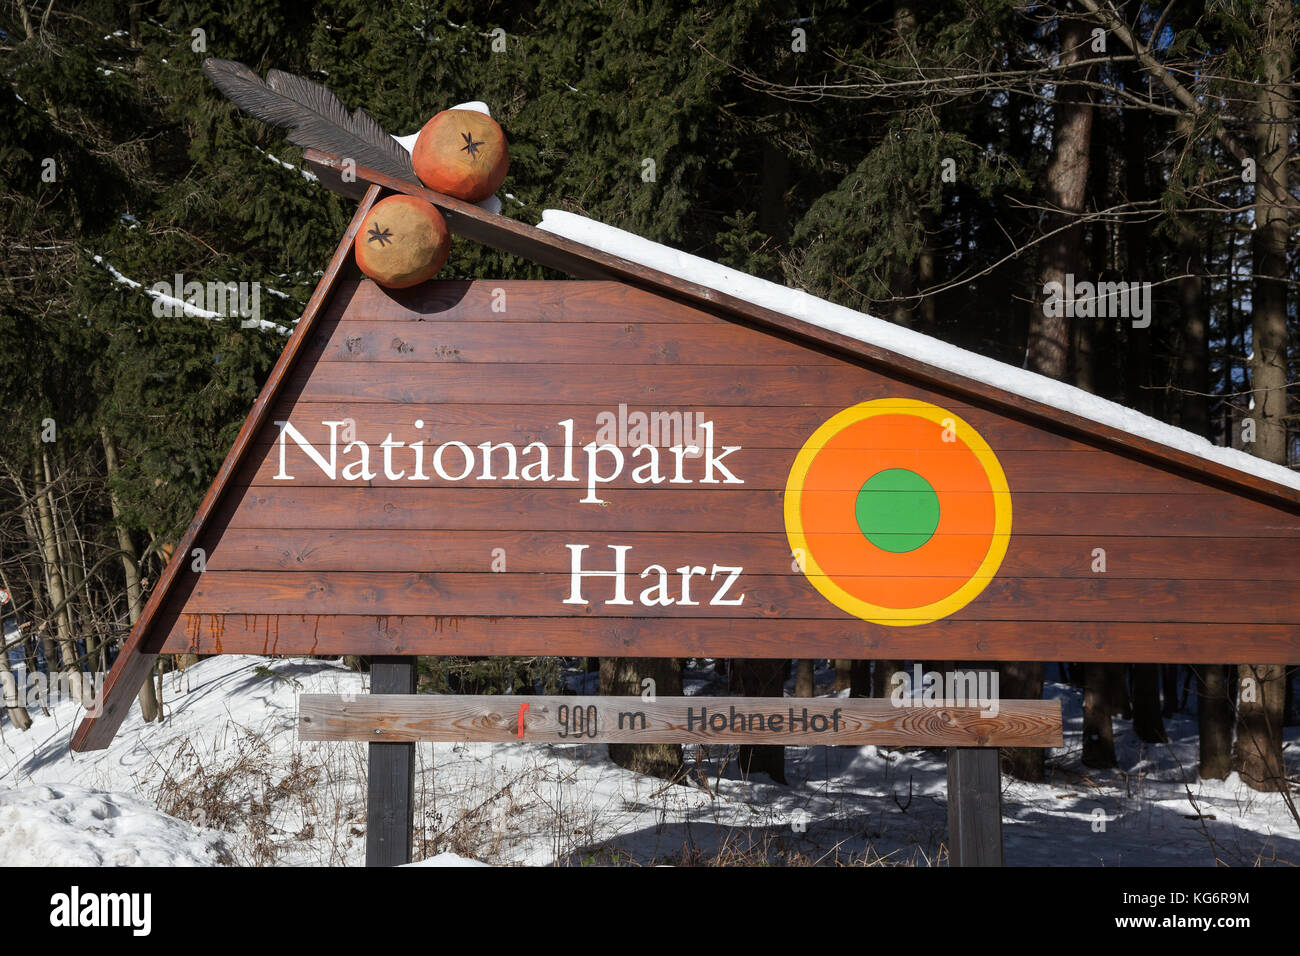 Nationalpark Haus Ranger Station Hohne Hof Stock Photo